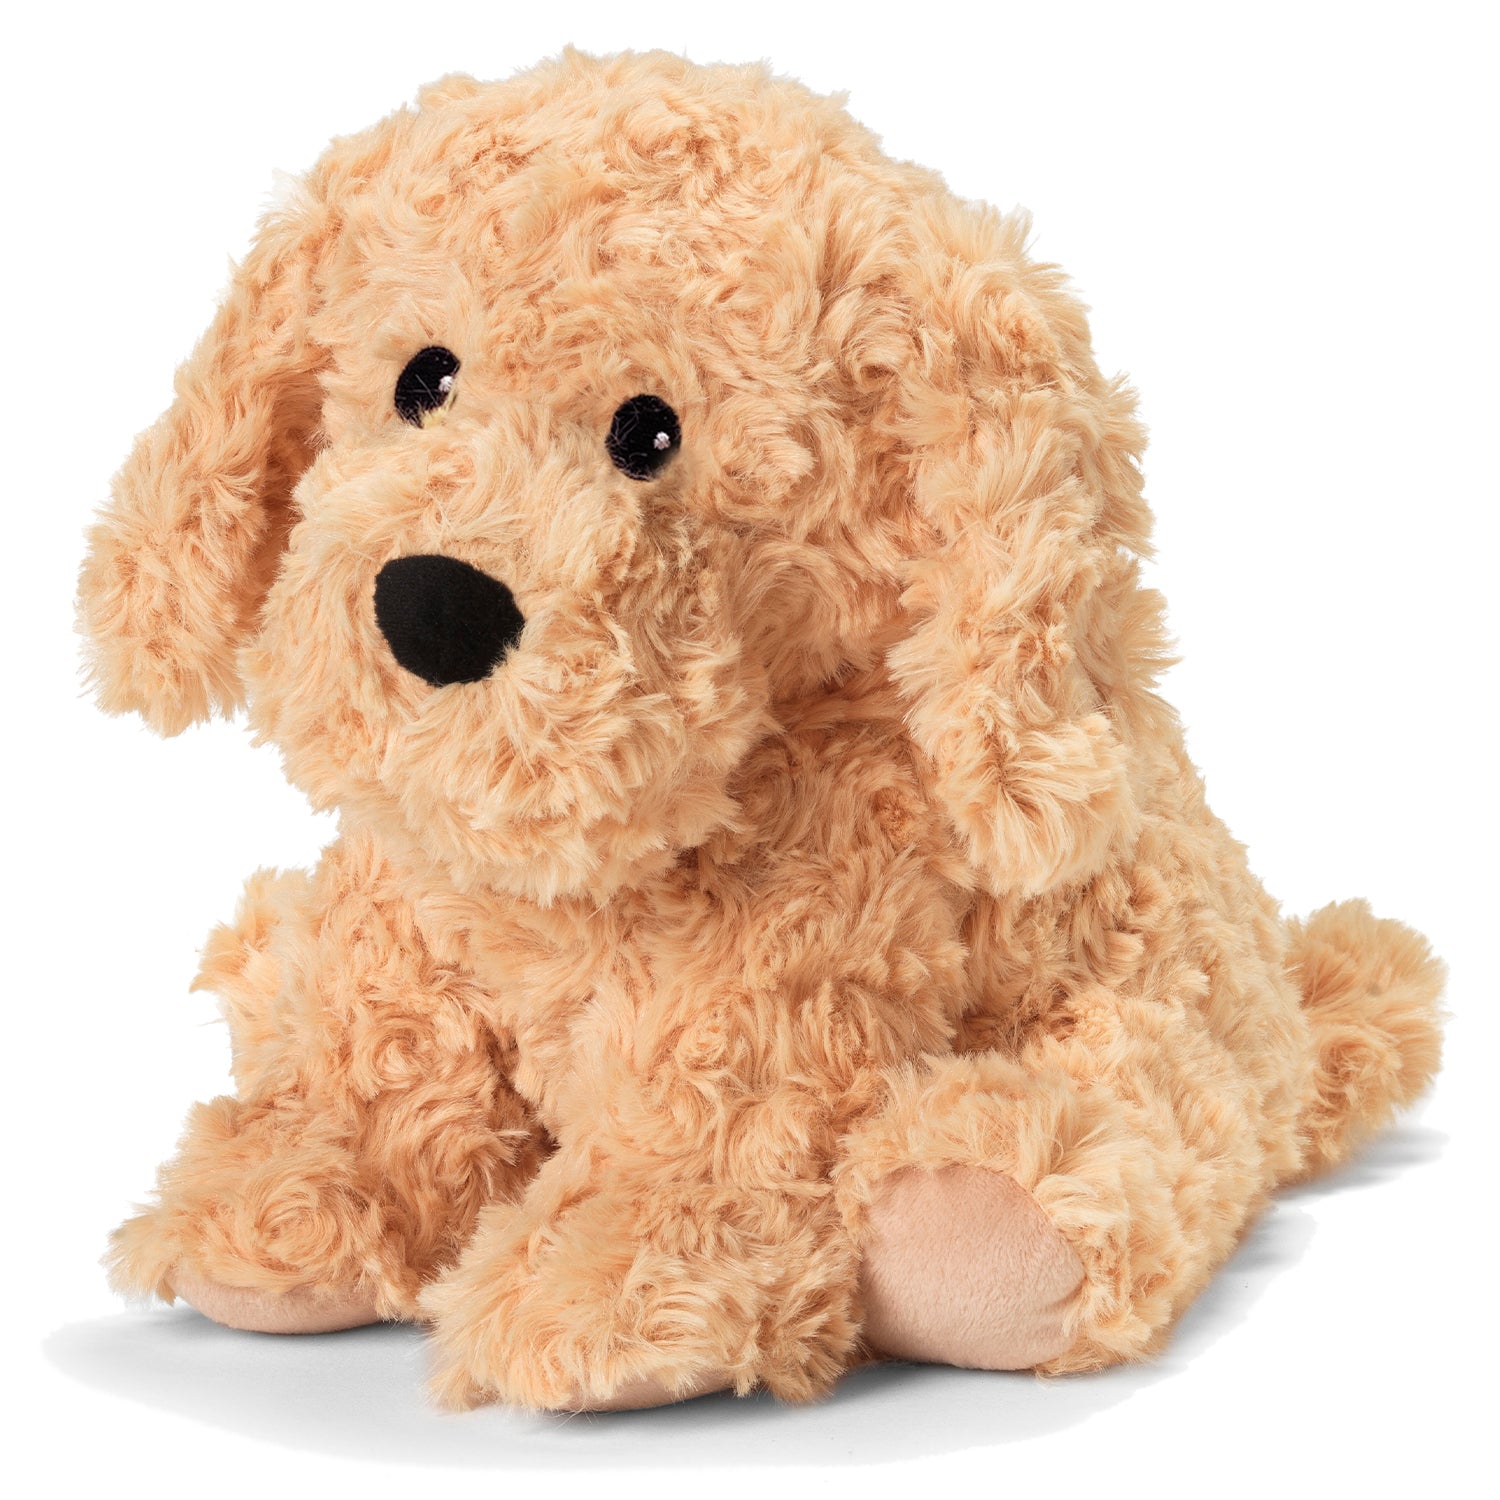 Warmies Plush Animal - Golden Dog